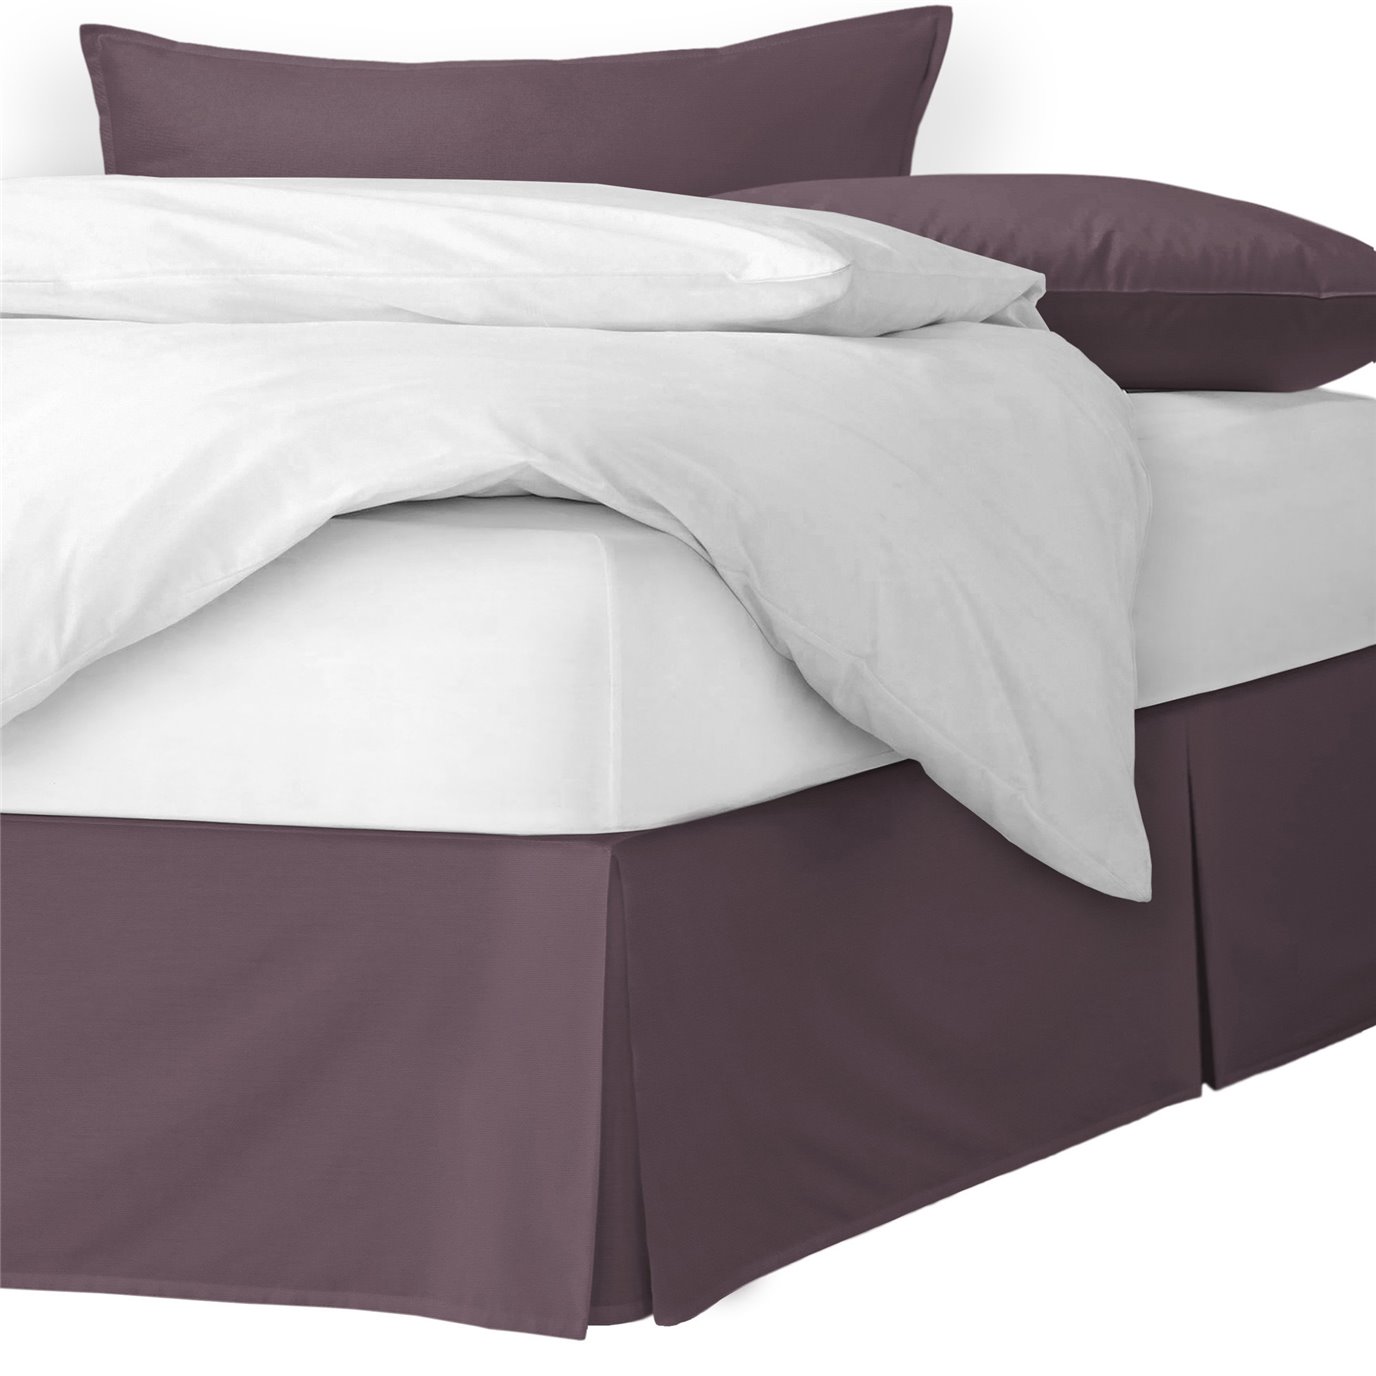 Braxton Purple Grape Platform Bed Skirt - Size King 18" Drop